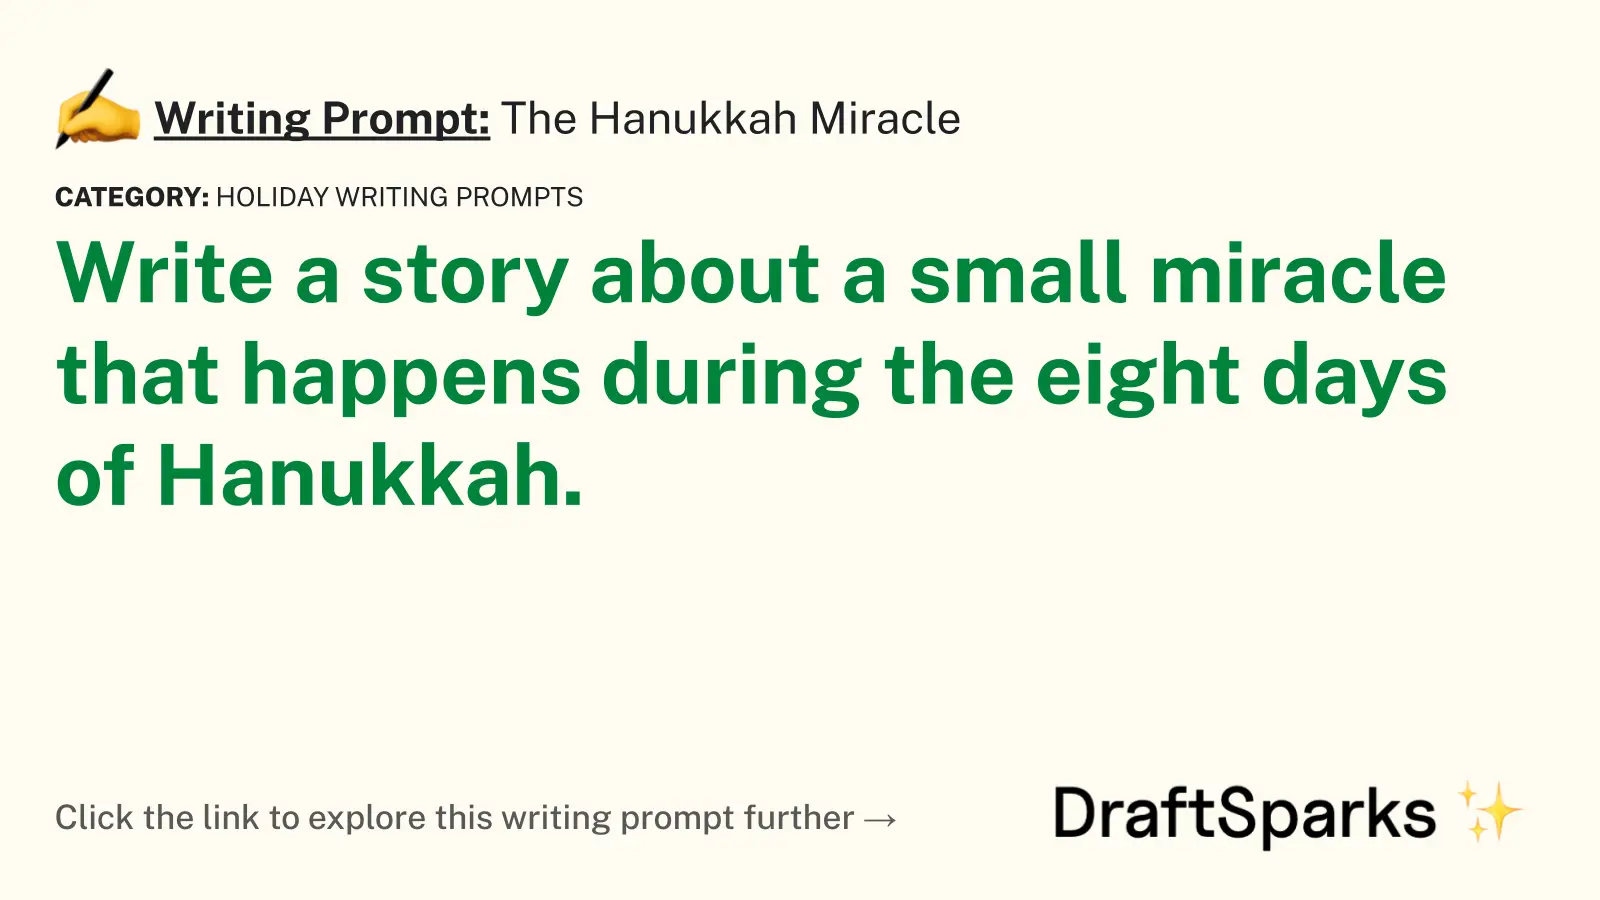 The Hanukkah Miracle